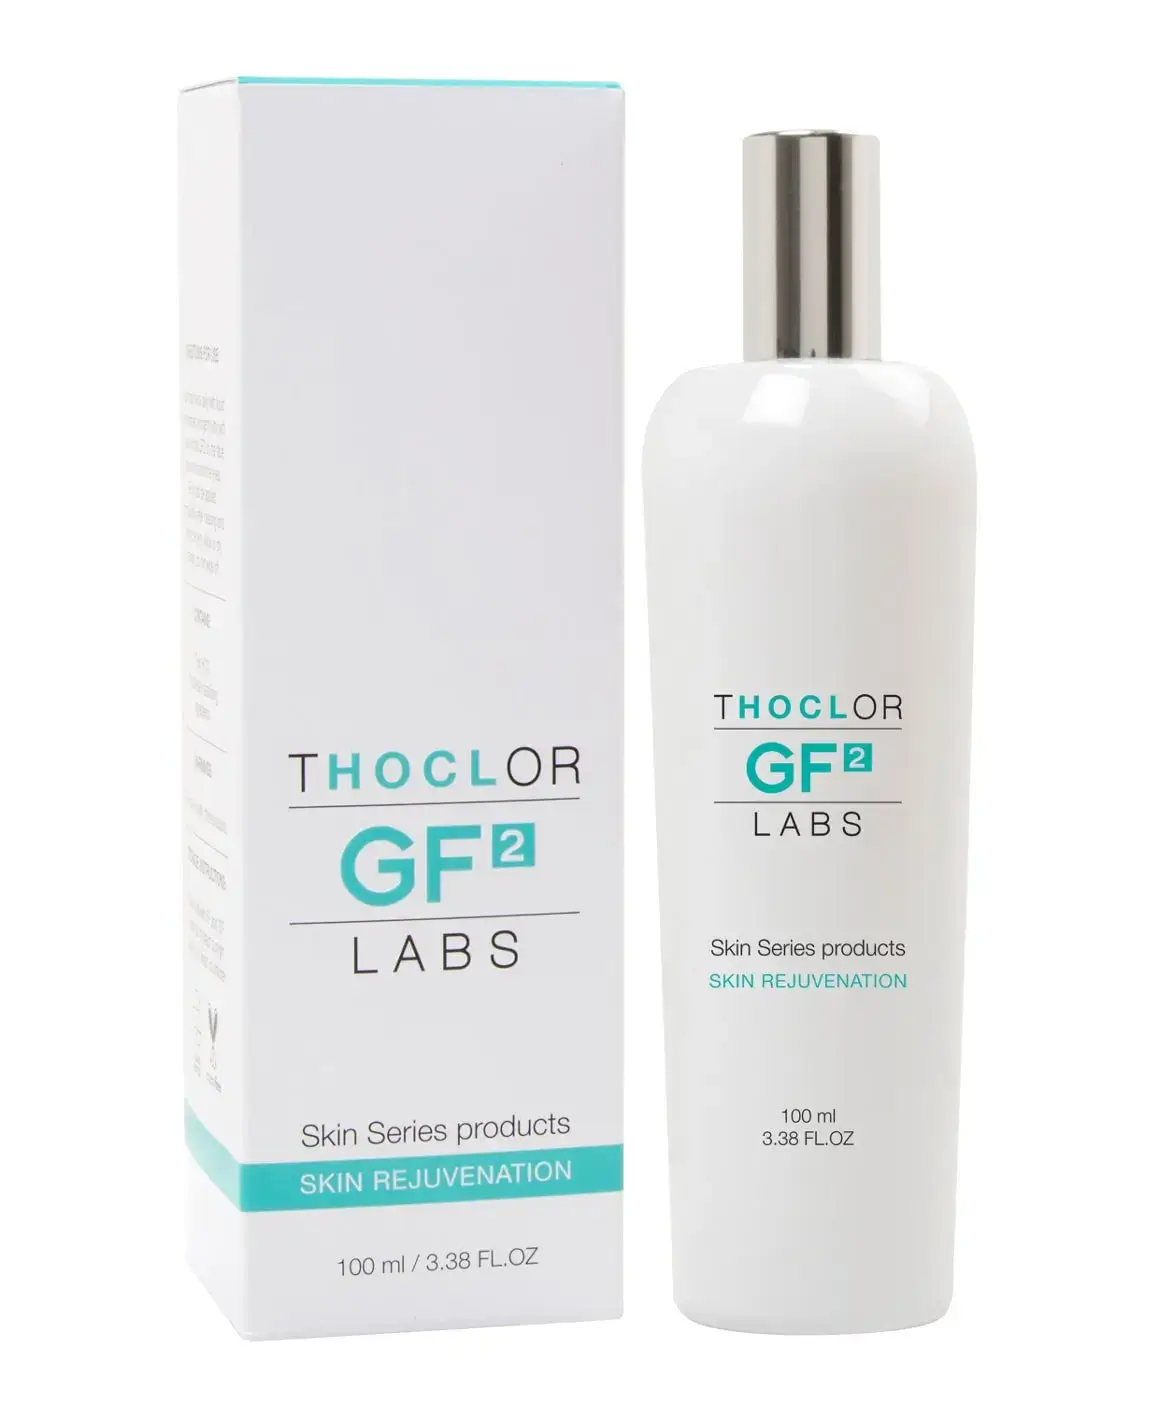 Thoclor GF2 Skin Rejuvenation 100ml